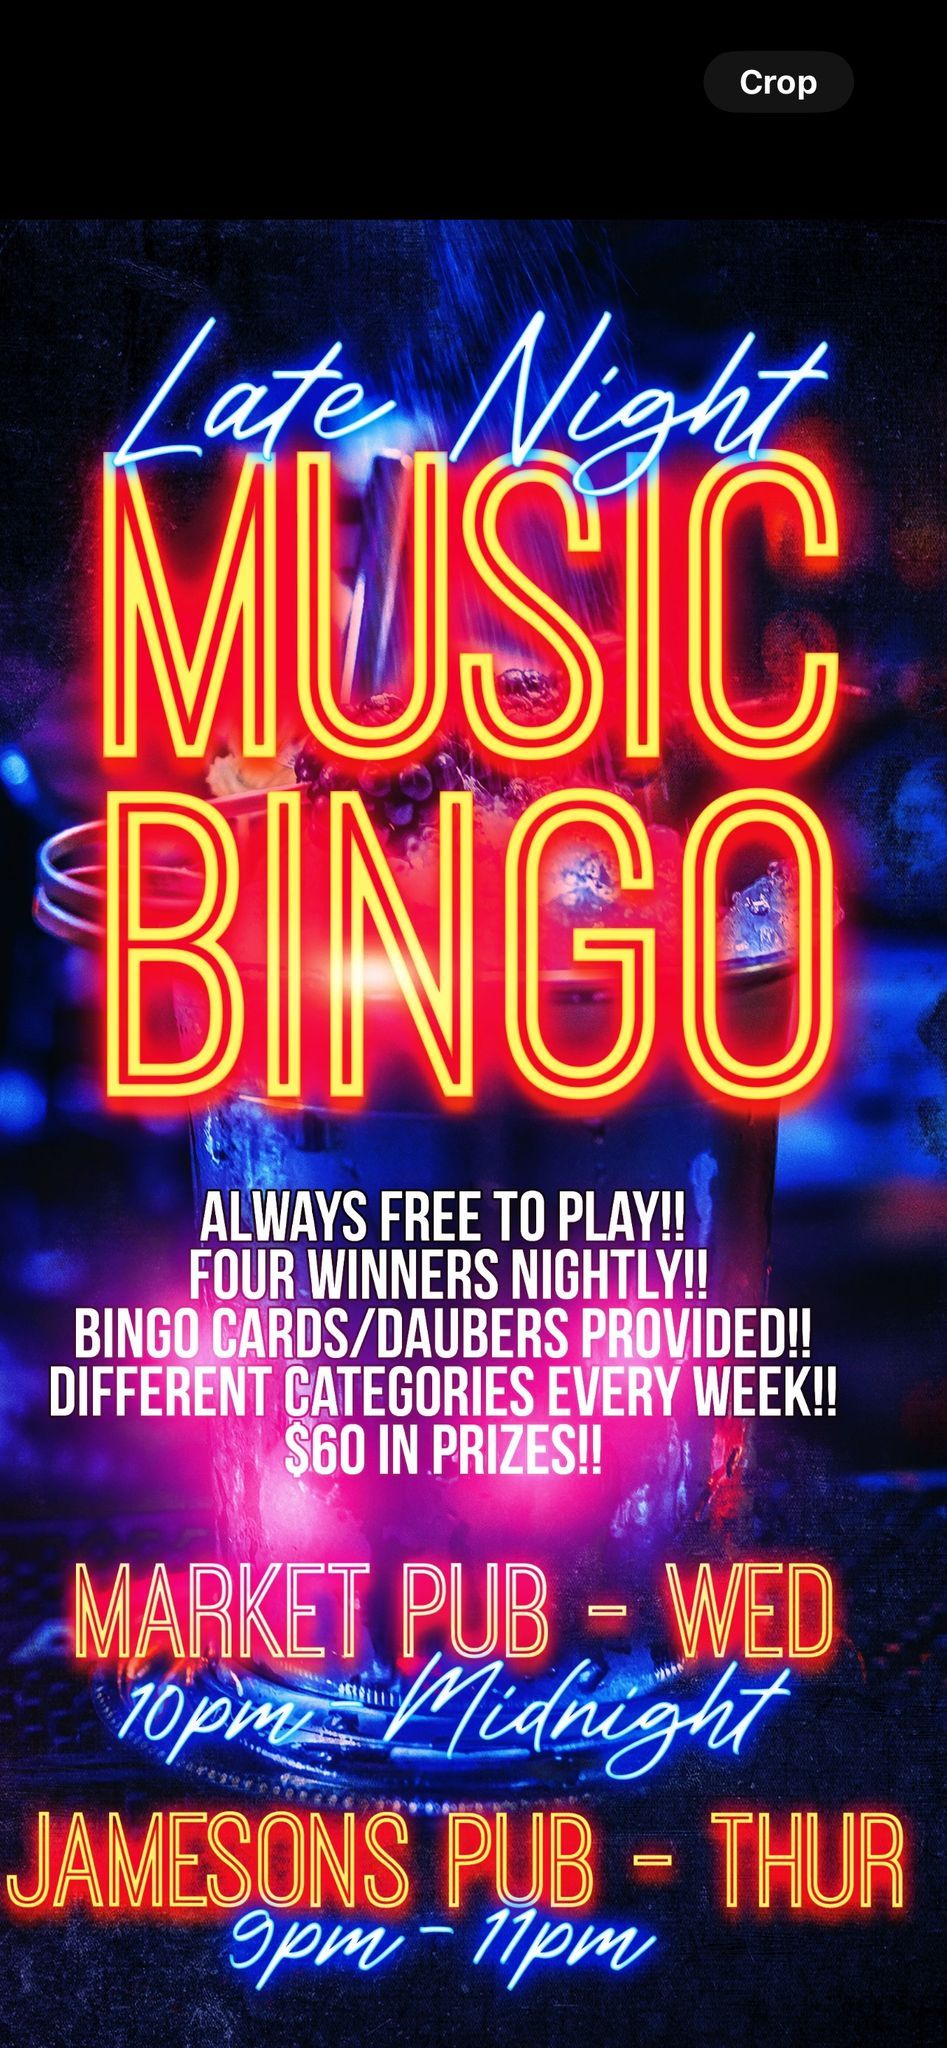 Late Night Music Bingo!! Every Thursday!!